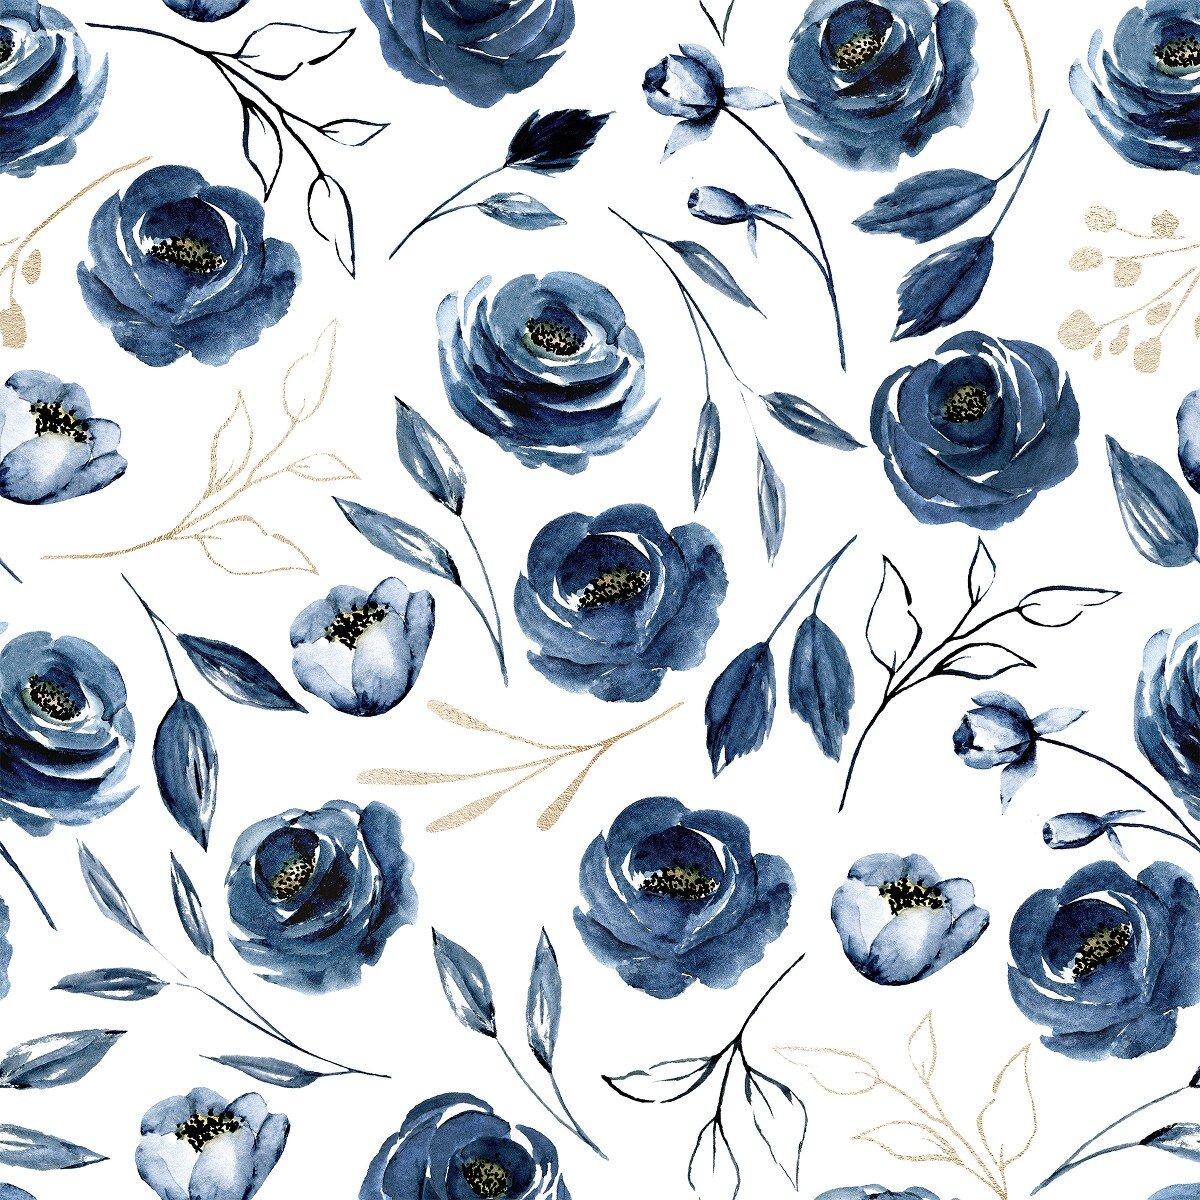 light blue flower wallpaper